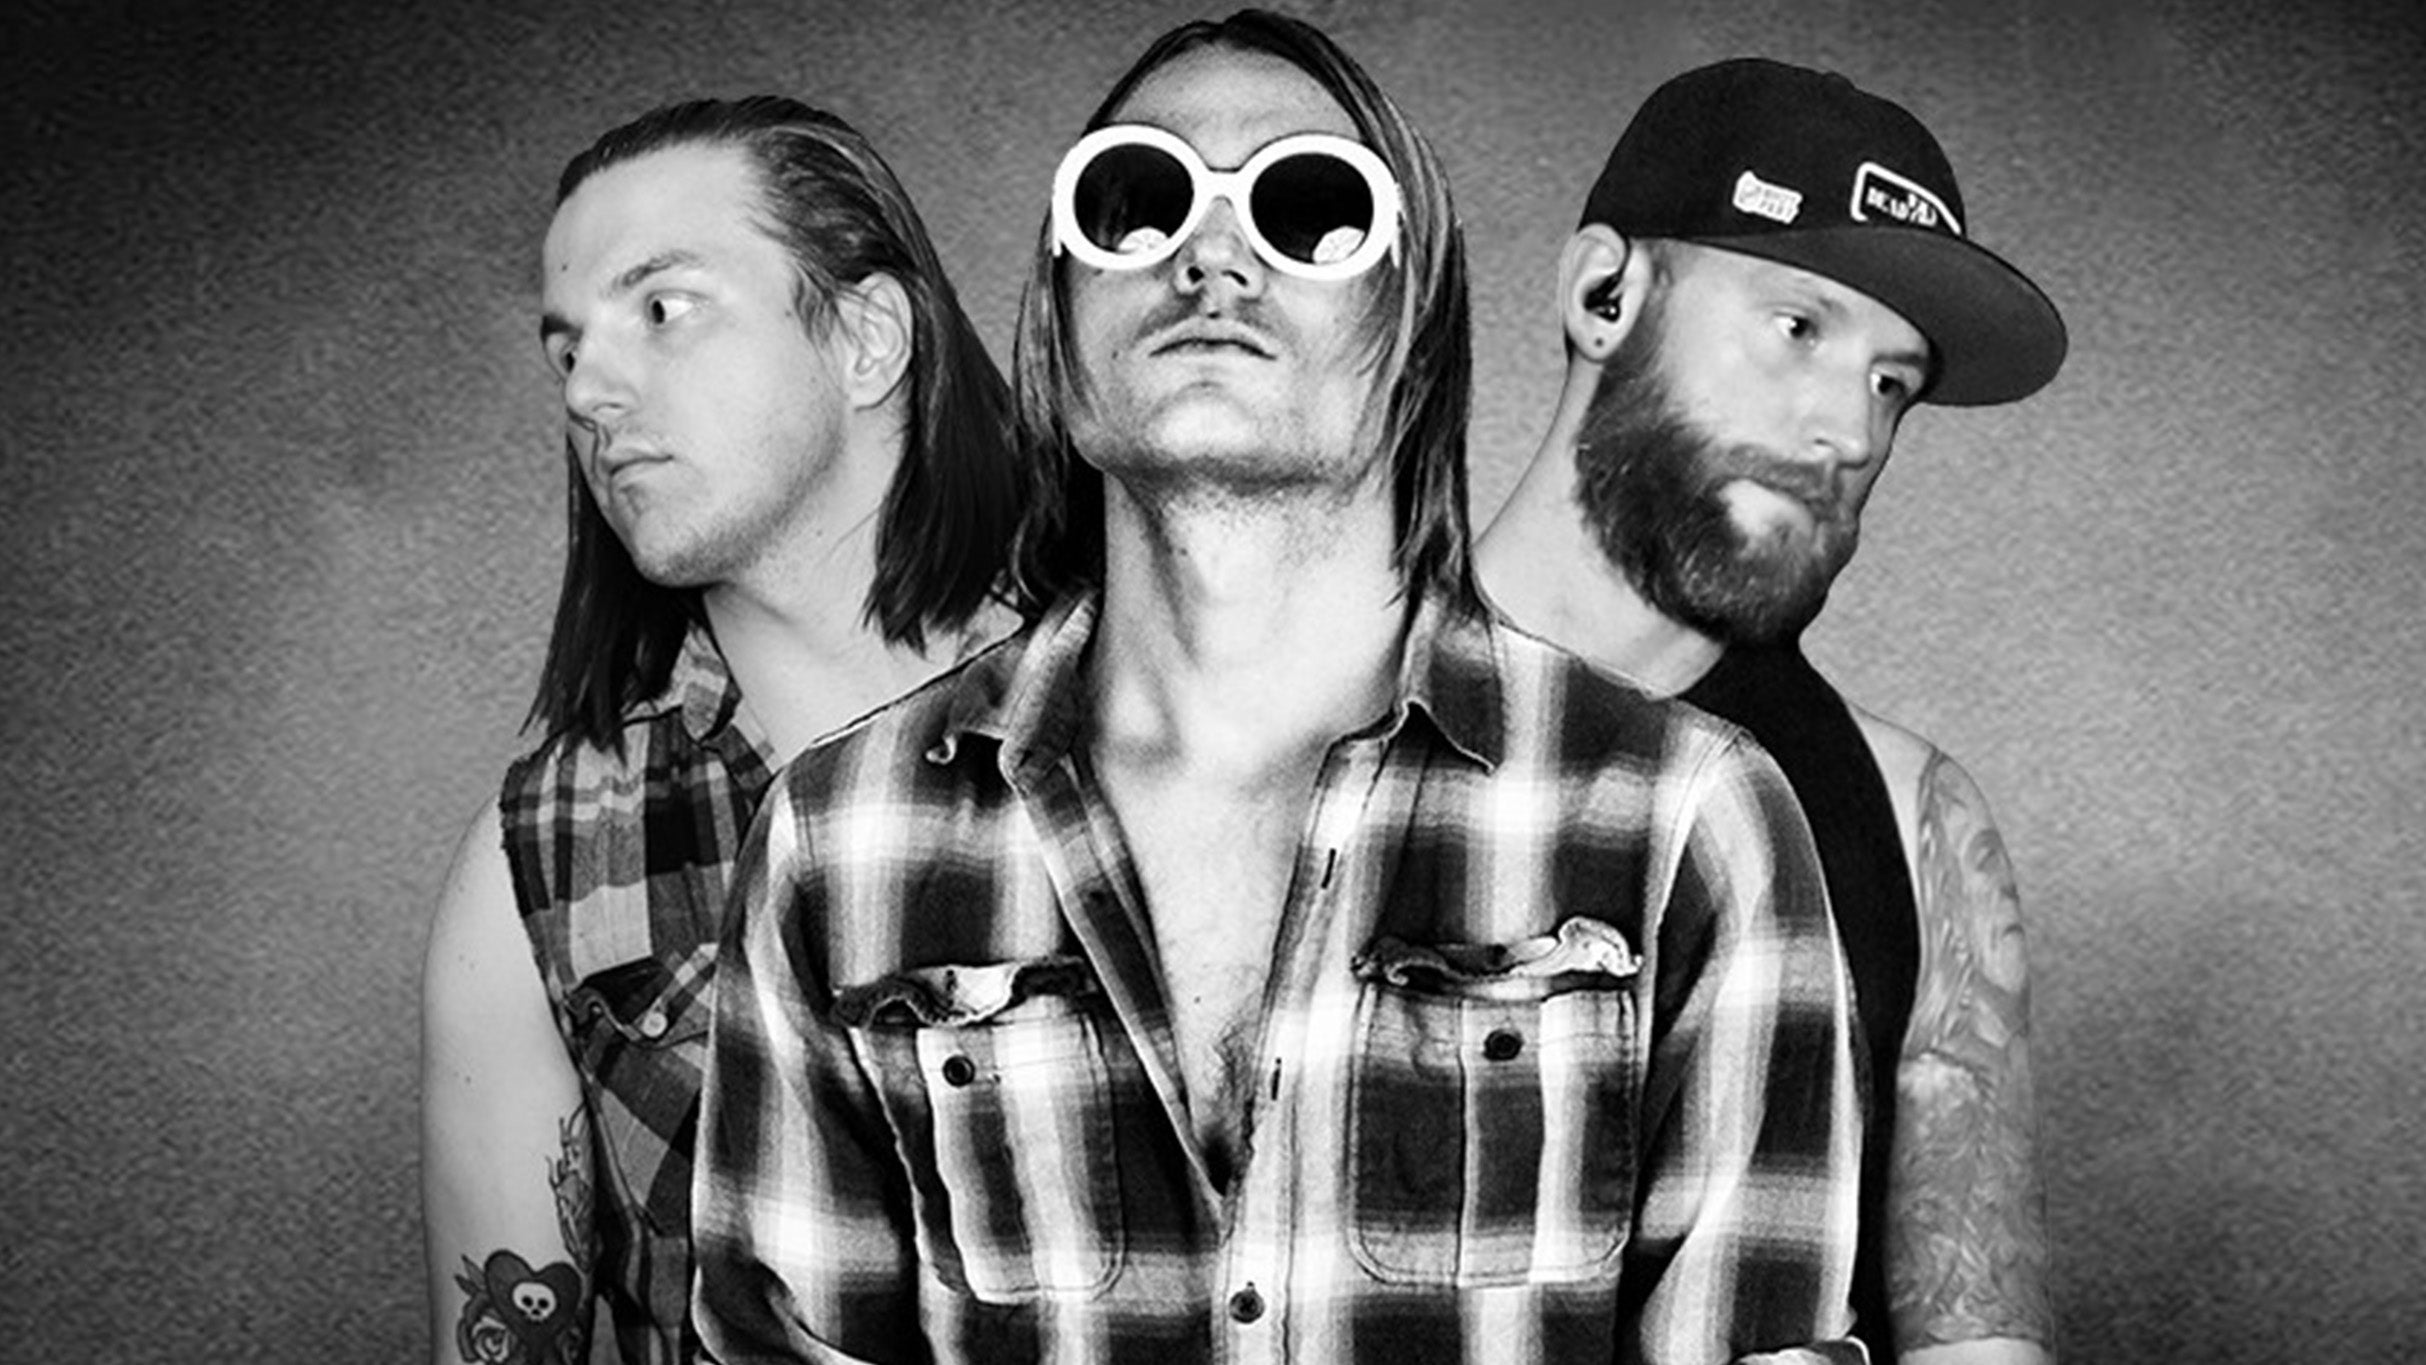 Grunge Night feat. Smells Like Nirvana, Grunge DNA, and Dead Original presale password